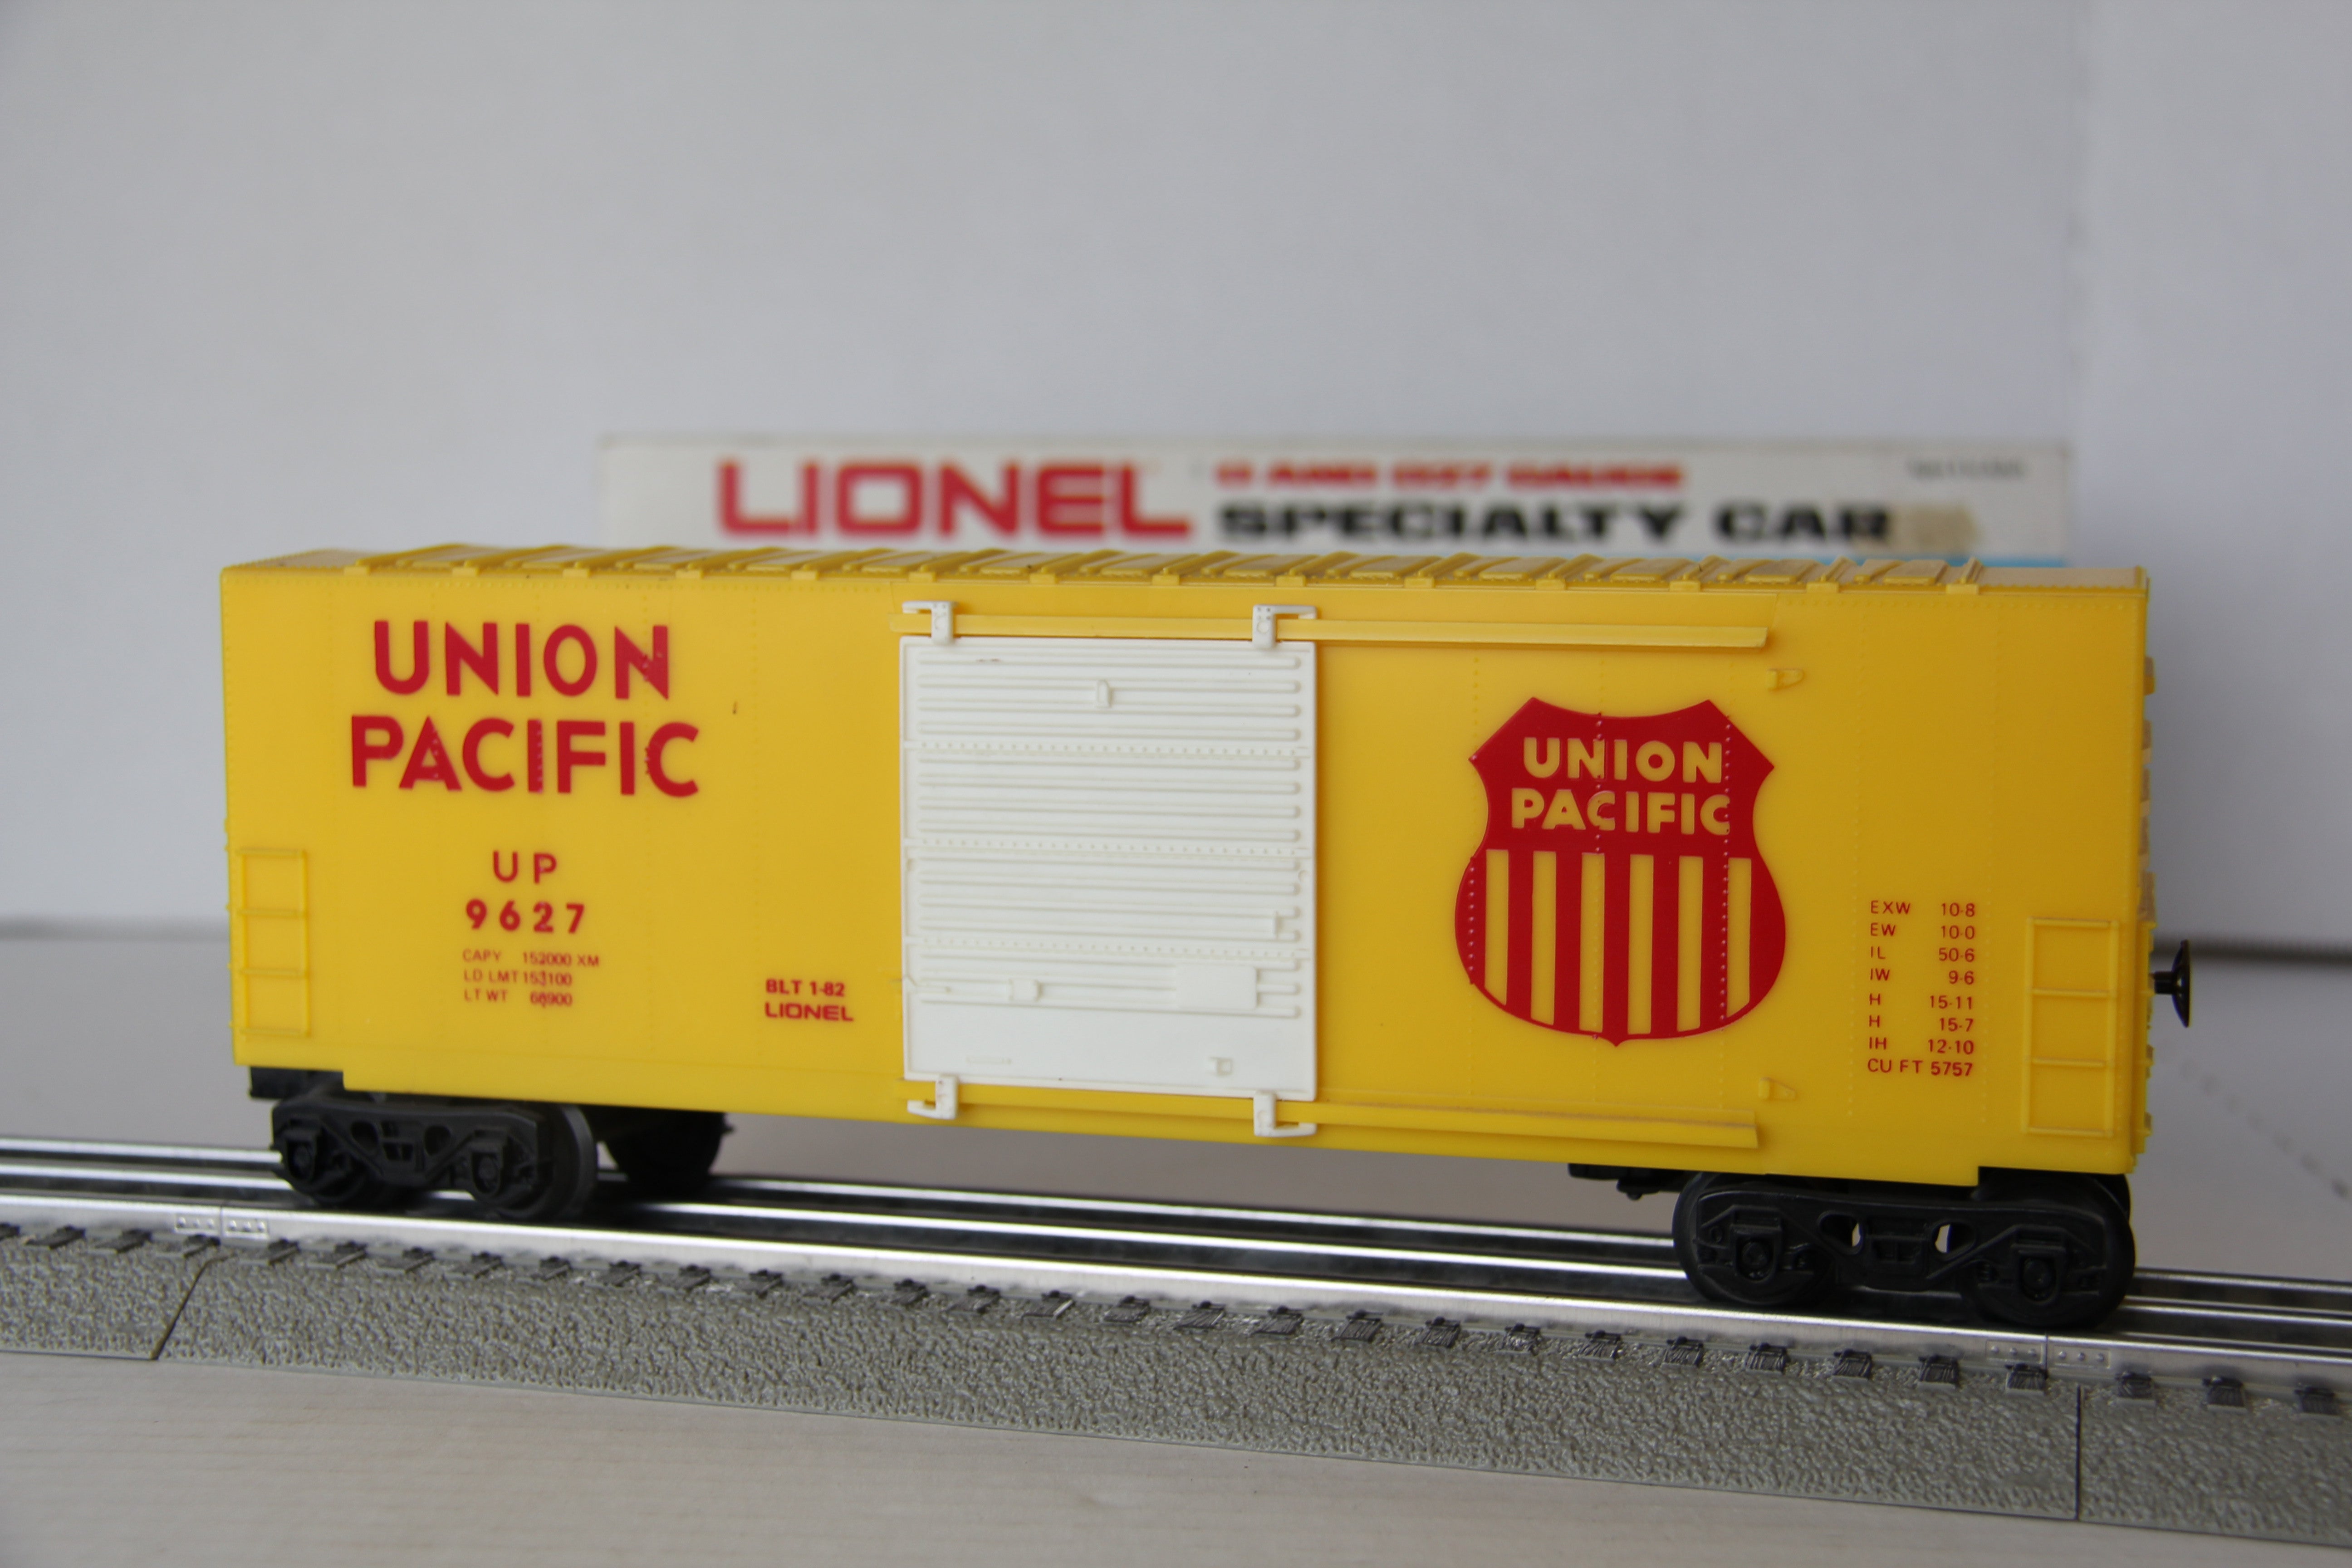 Lionel 6-9627 Union Pacific Hi-Cube Box Car-Second hand-M3954